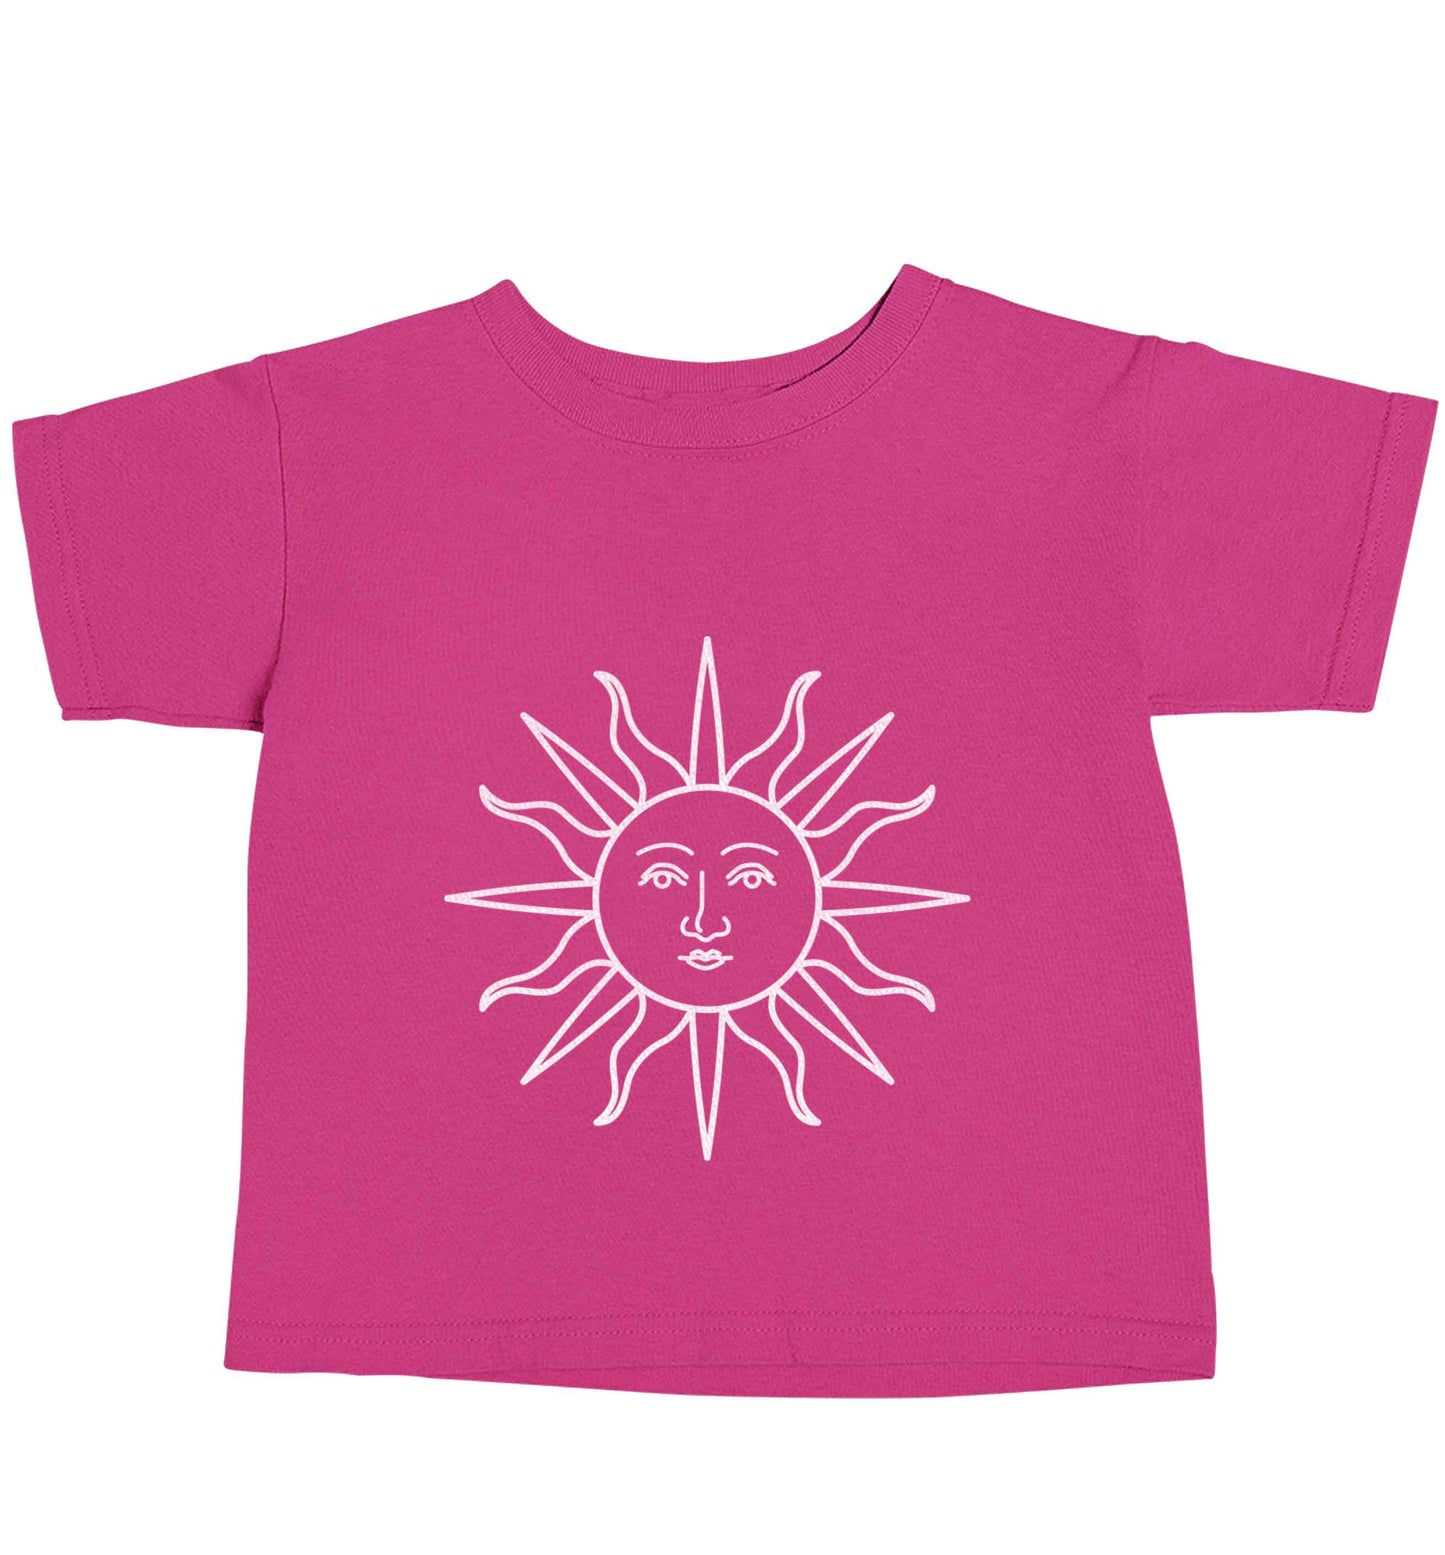 Sun face illustration pink baby toddler Tshirt 2 Years